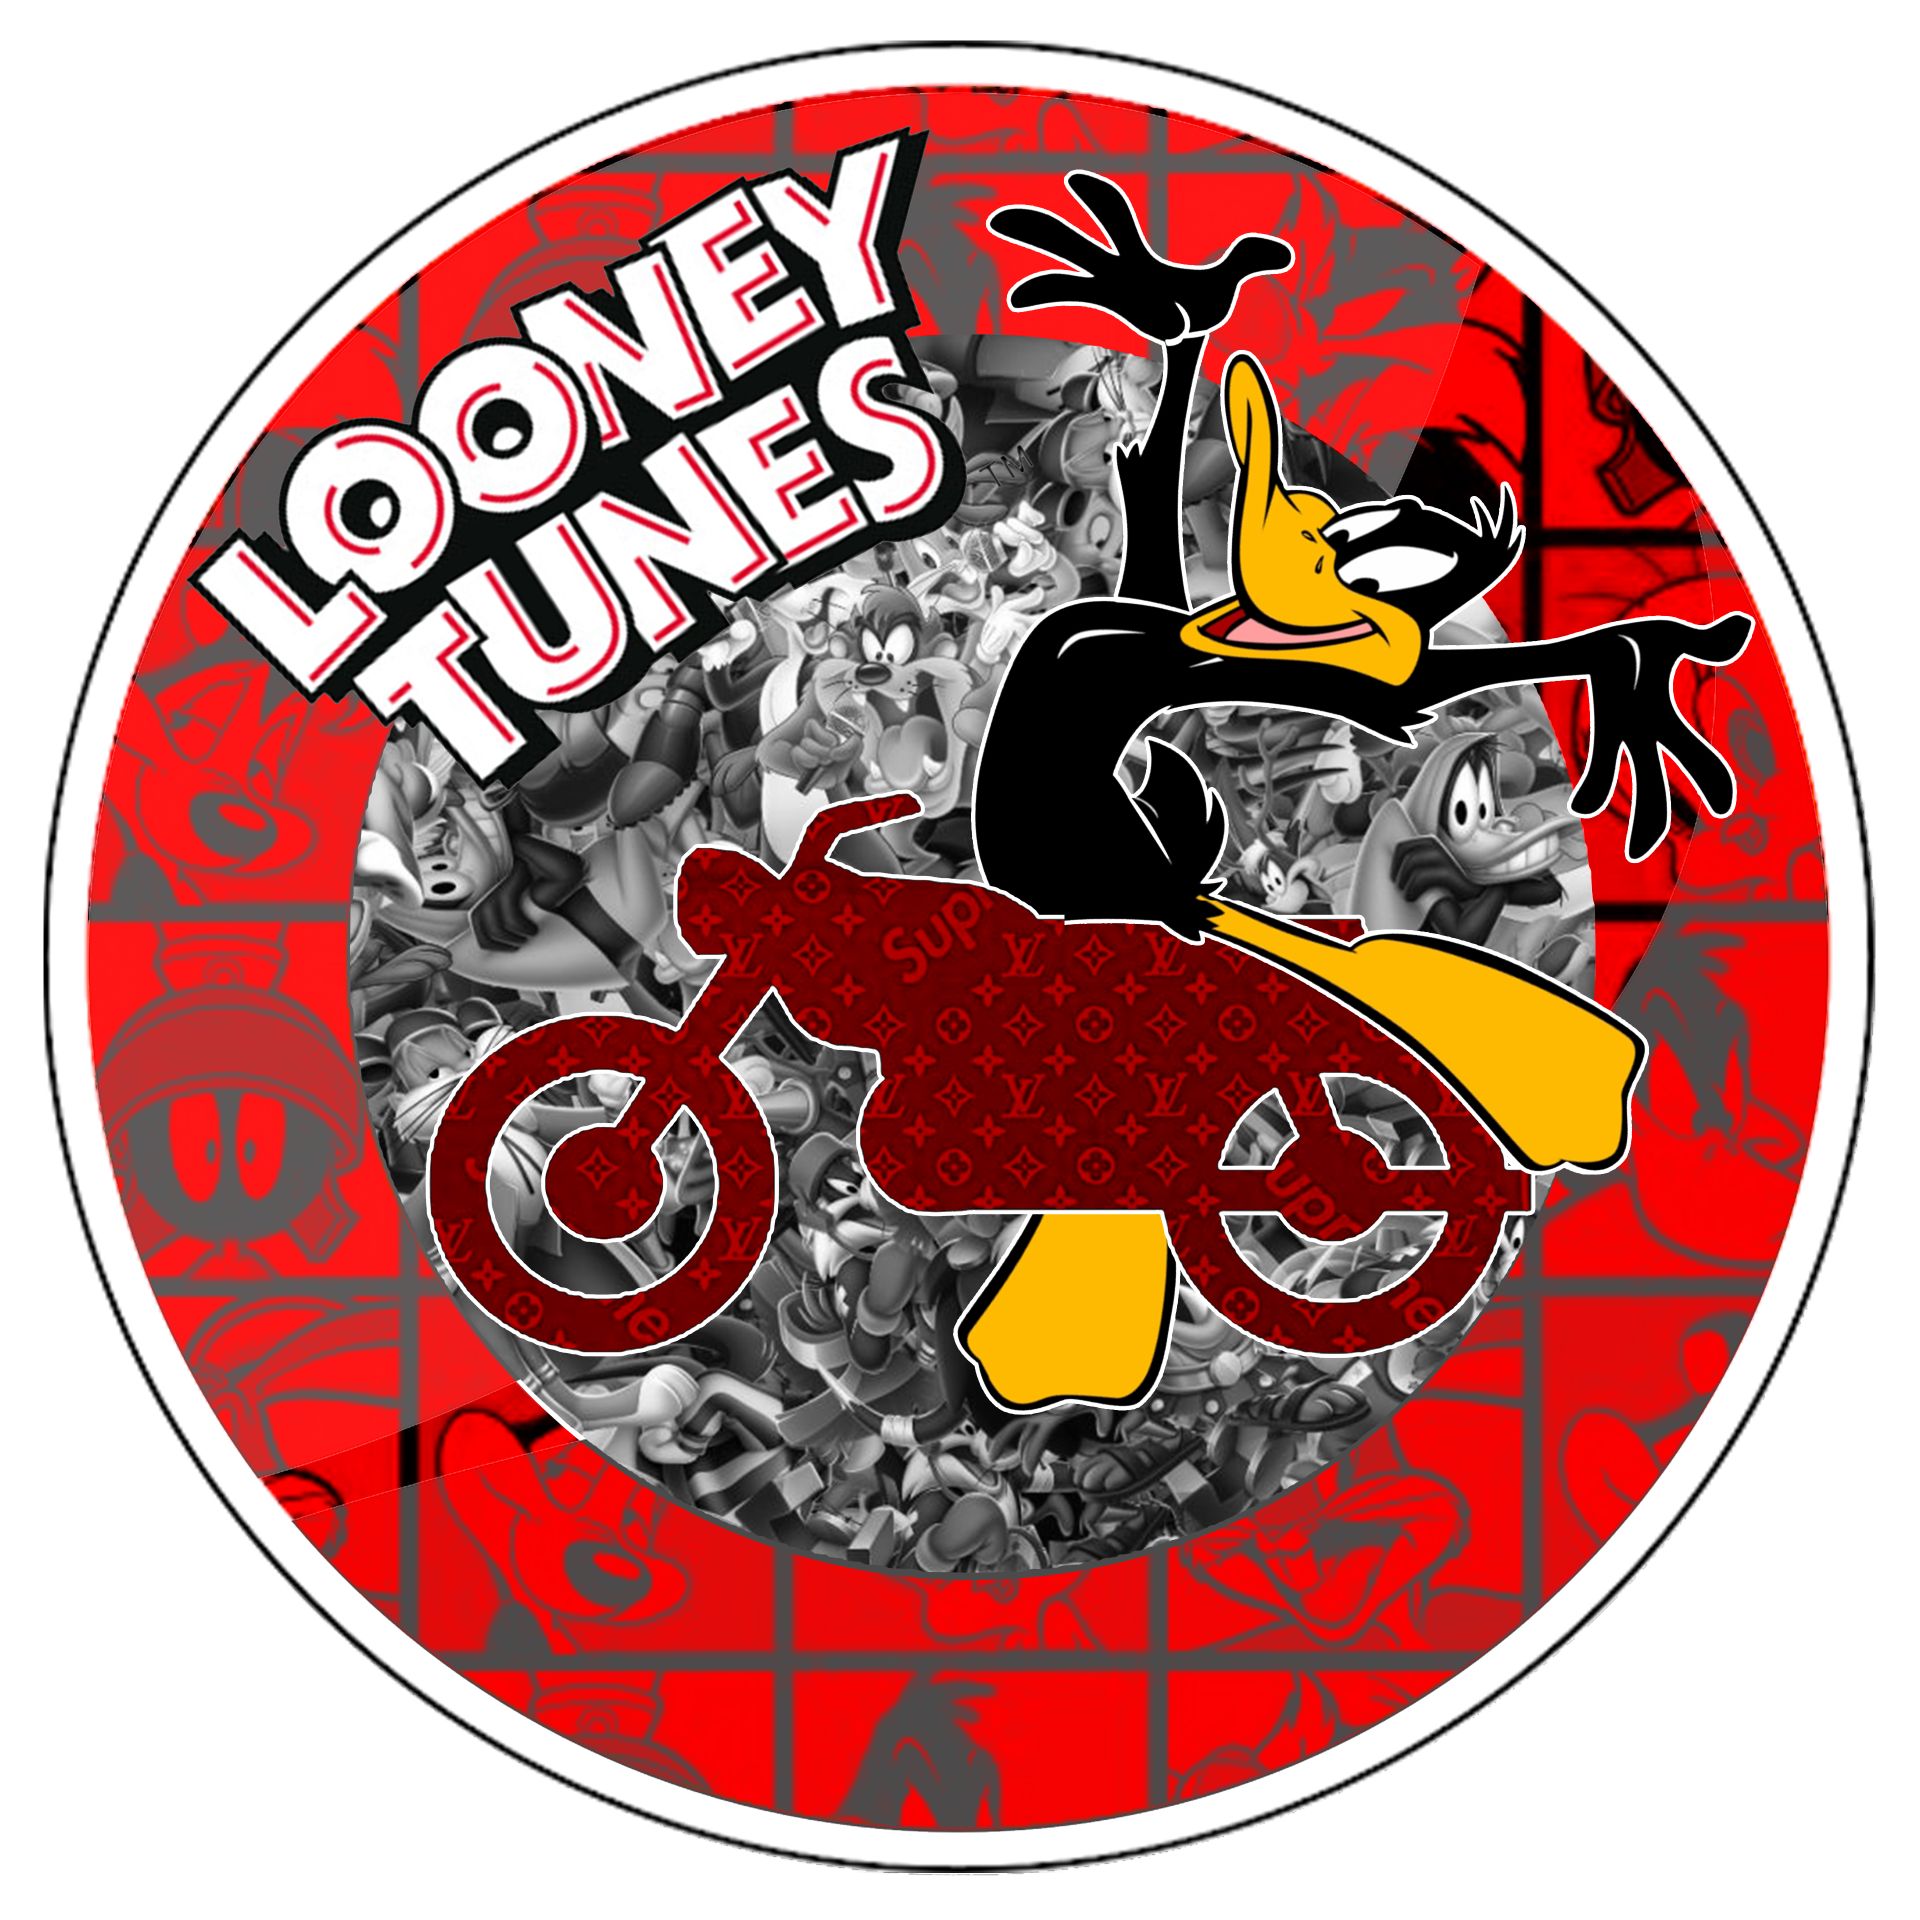 Charly Rocks (Né en 1983) Looney tunes, 2021

Panneau de signalisation

Impressi&hellip;